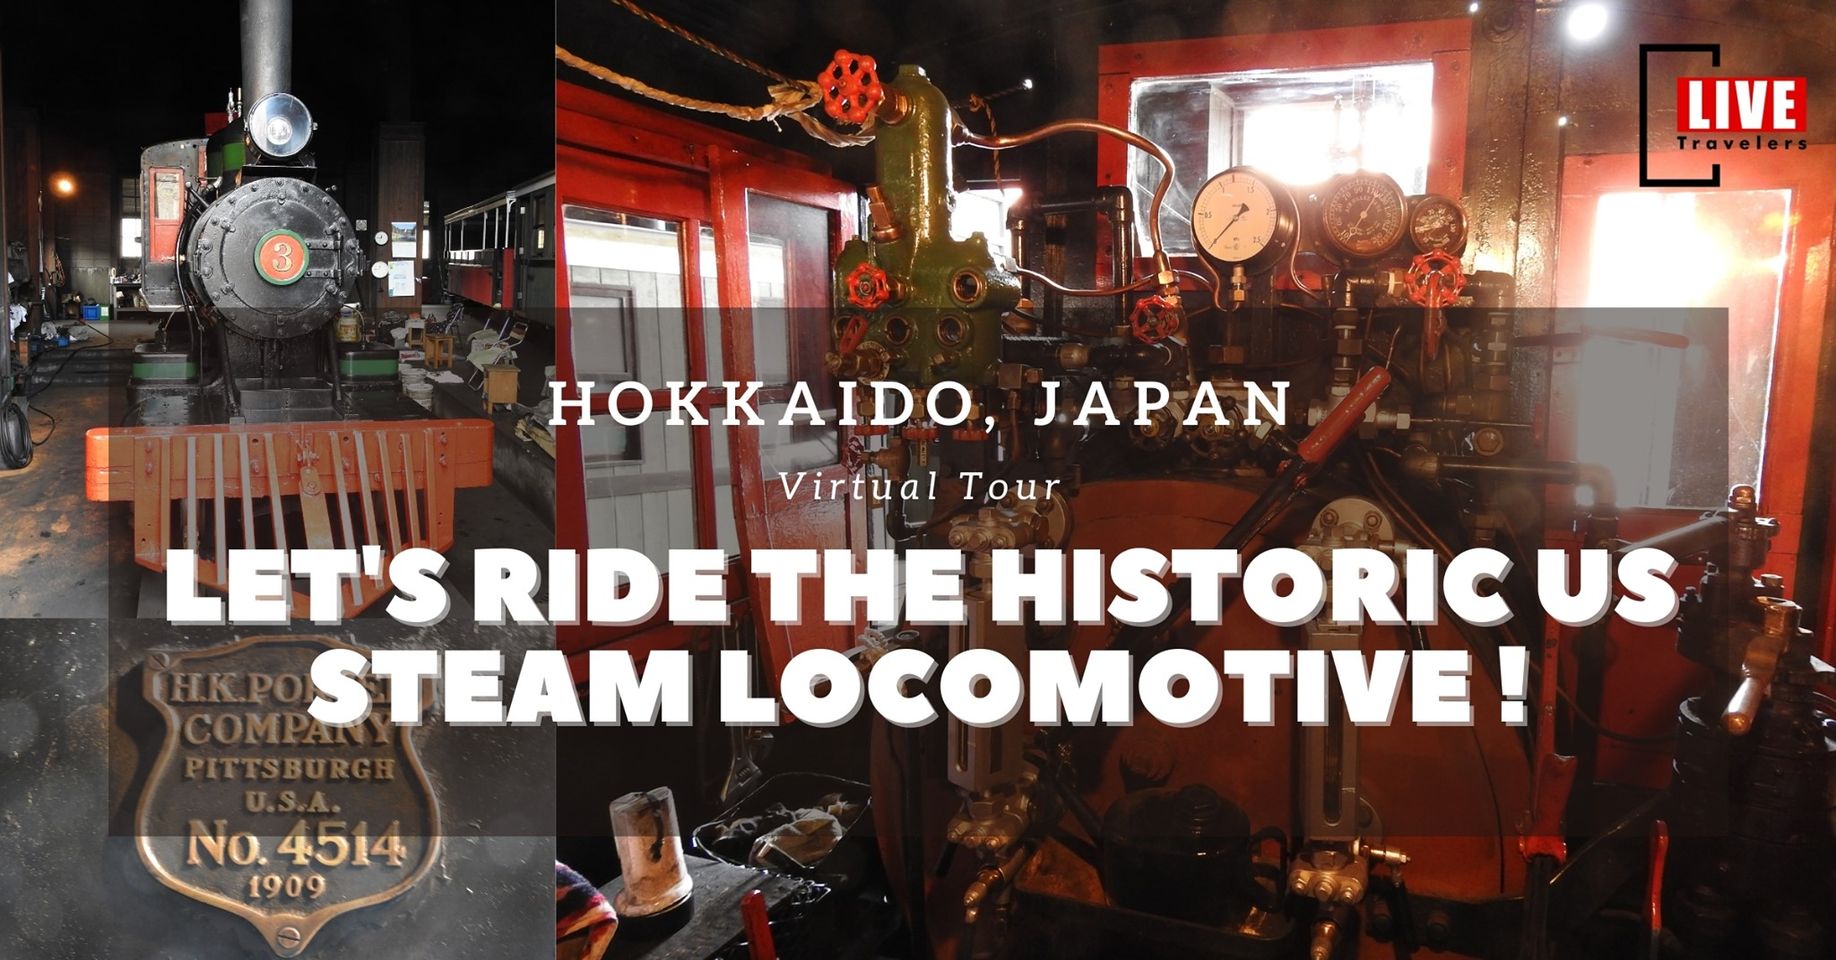 Hokkaido, Japan - Let's ride the historic US steam locomotive !